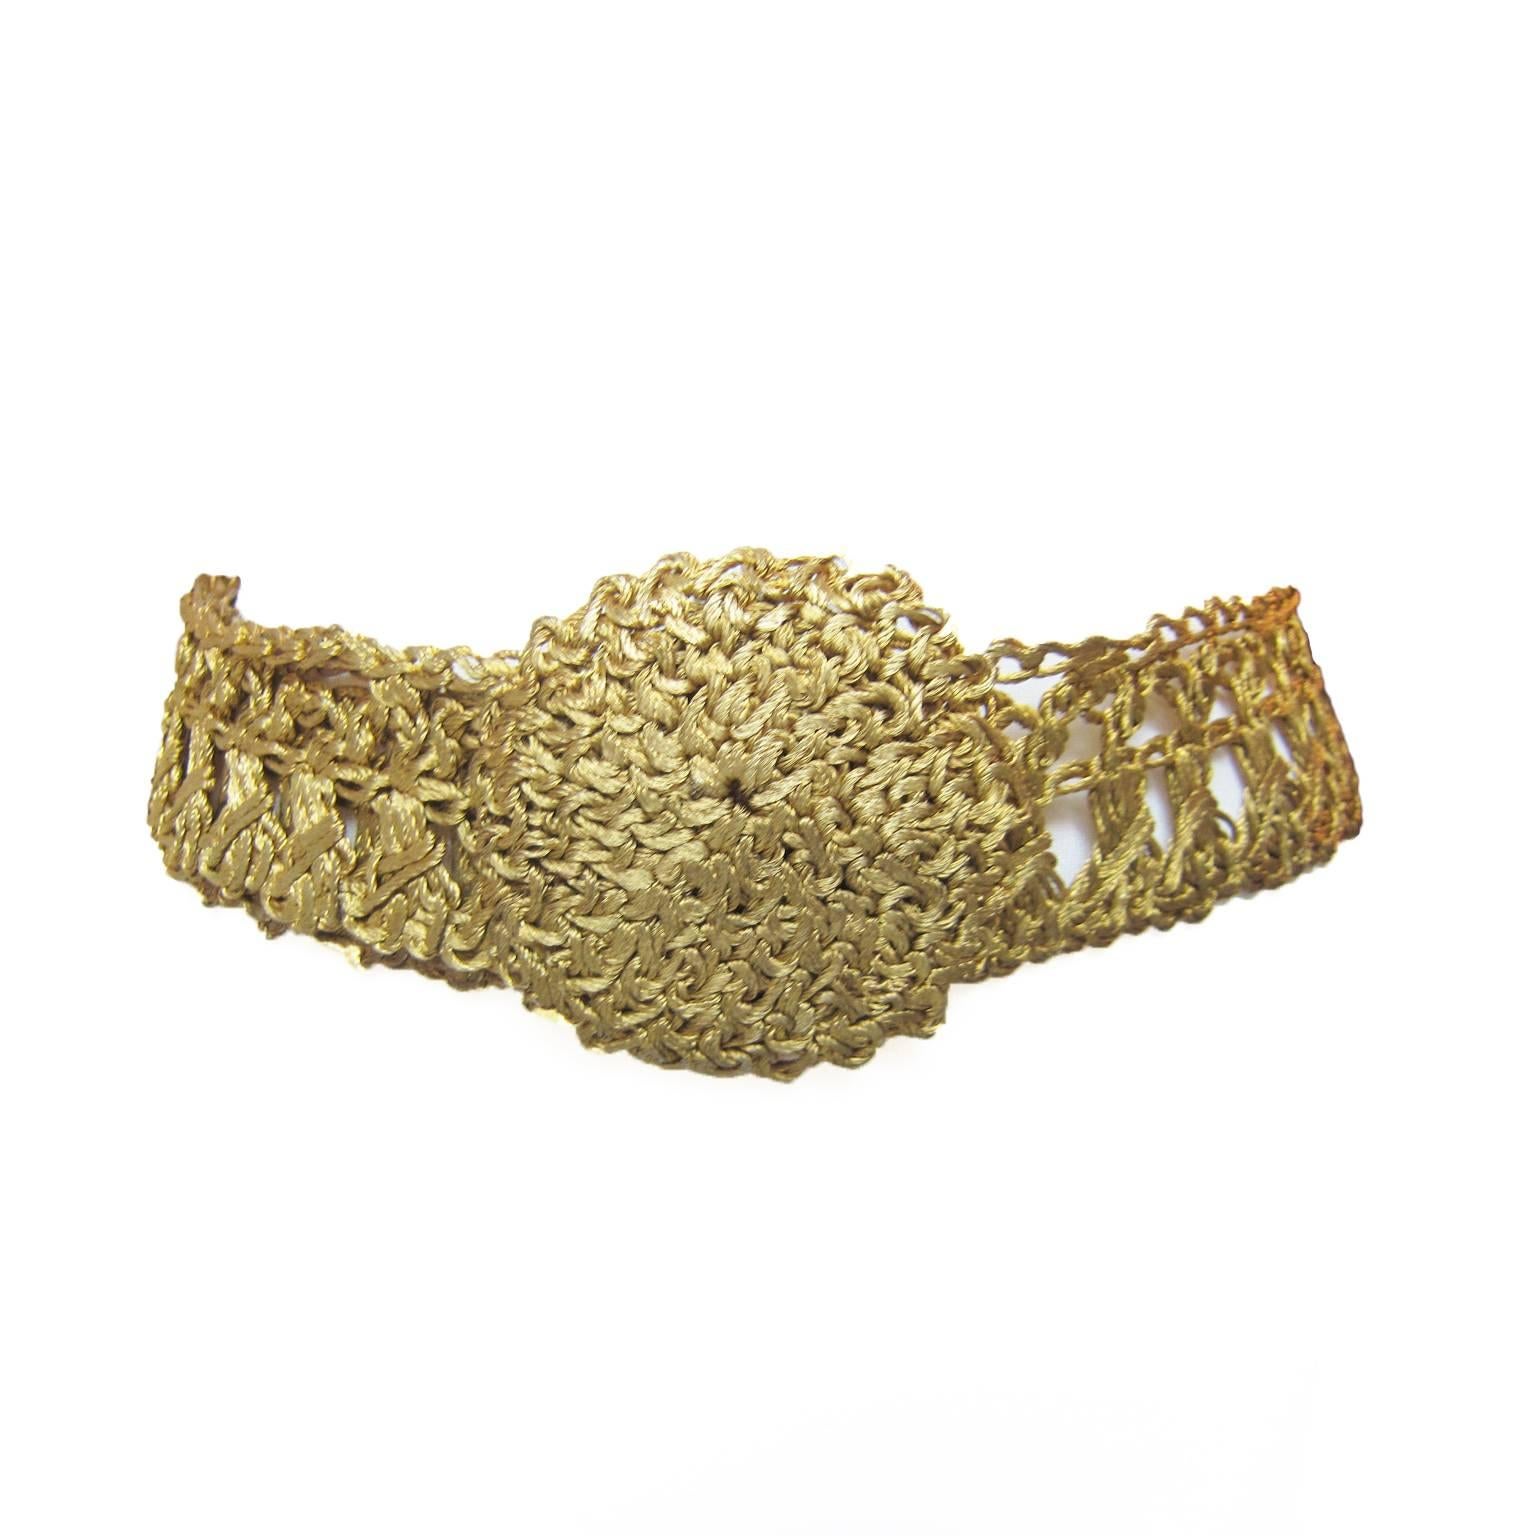 Unique golden metal wire hand crochet flattened belt from circa 1960s. With hook closure. 
Measurements :
Total length : 90 cm
Width : 4 cm
Circe motief : 8 cm

